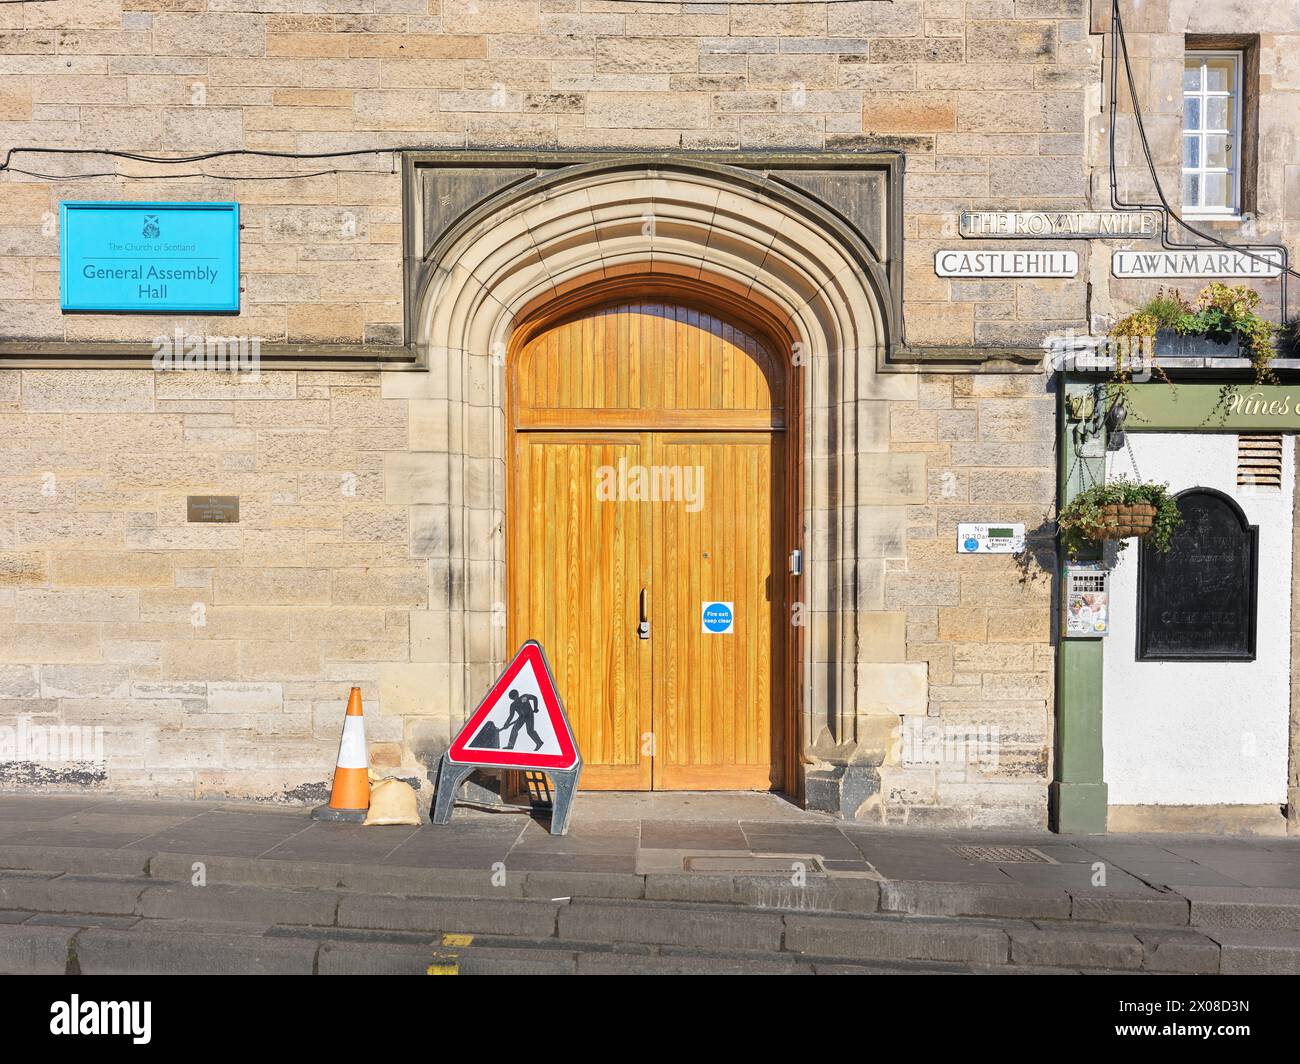 General Assembly Hall, The Church of Scotland, Castlehill, Royal Mile, Edinburgh, Scotland. Stock Photo